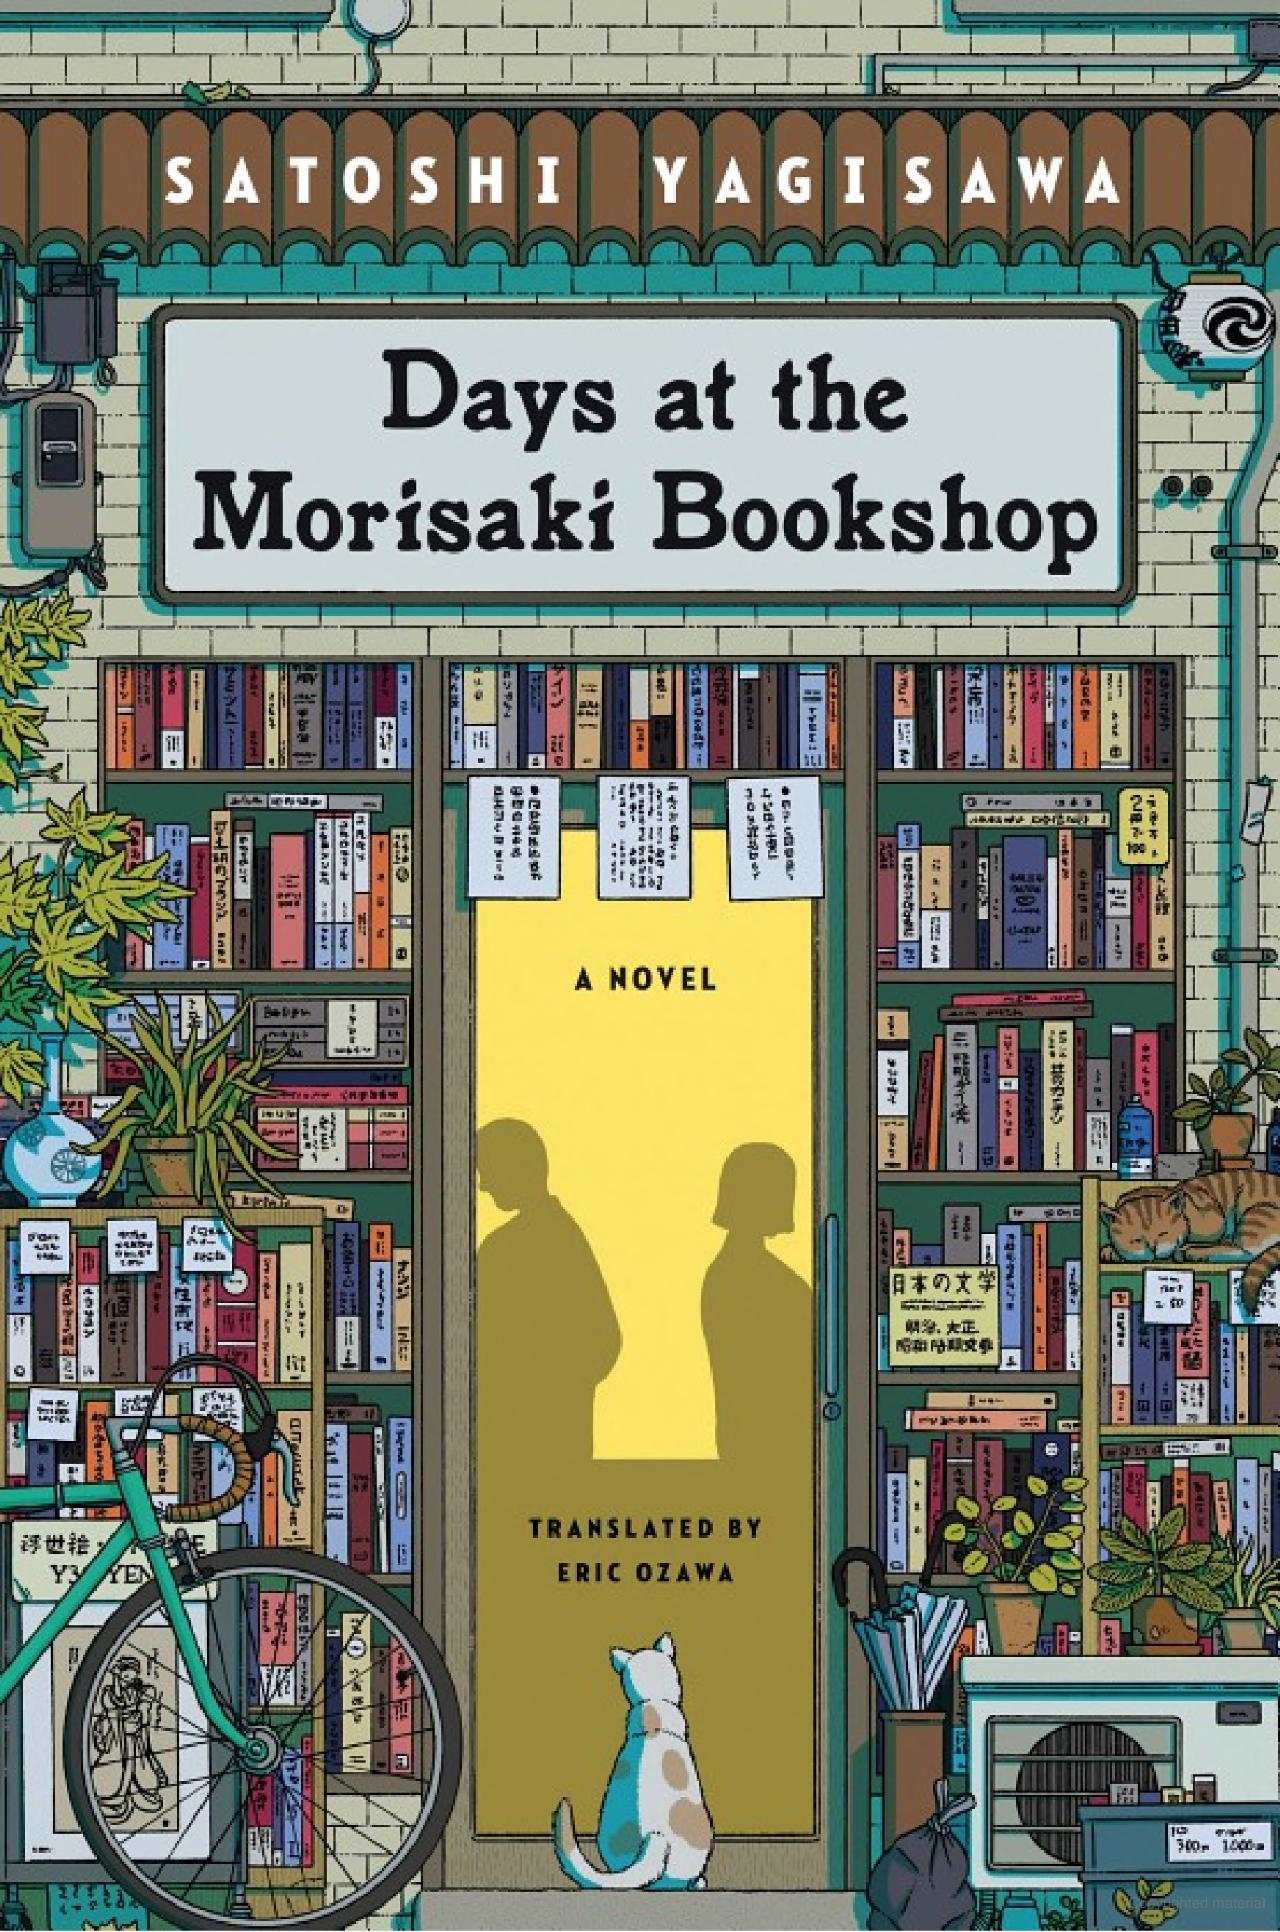 Days at the Morisaki Bookshop by Satoshi Yagisawa